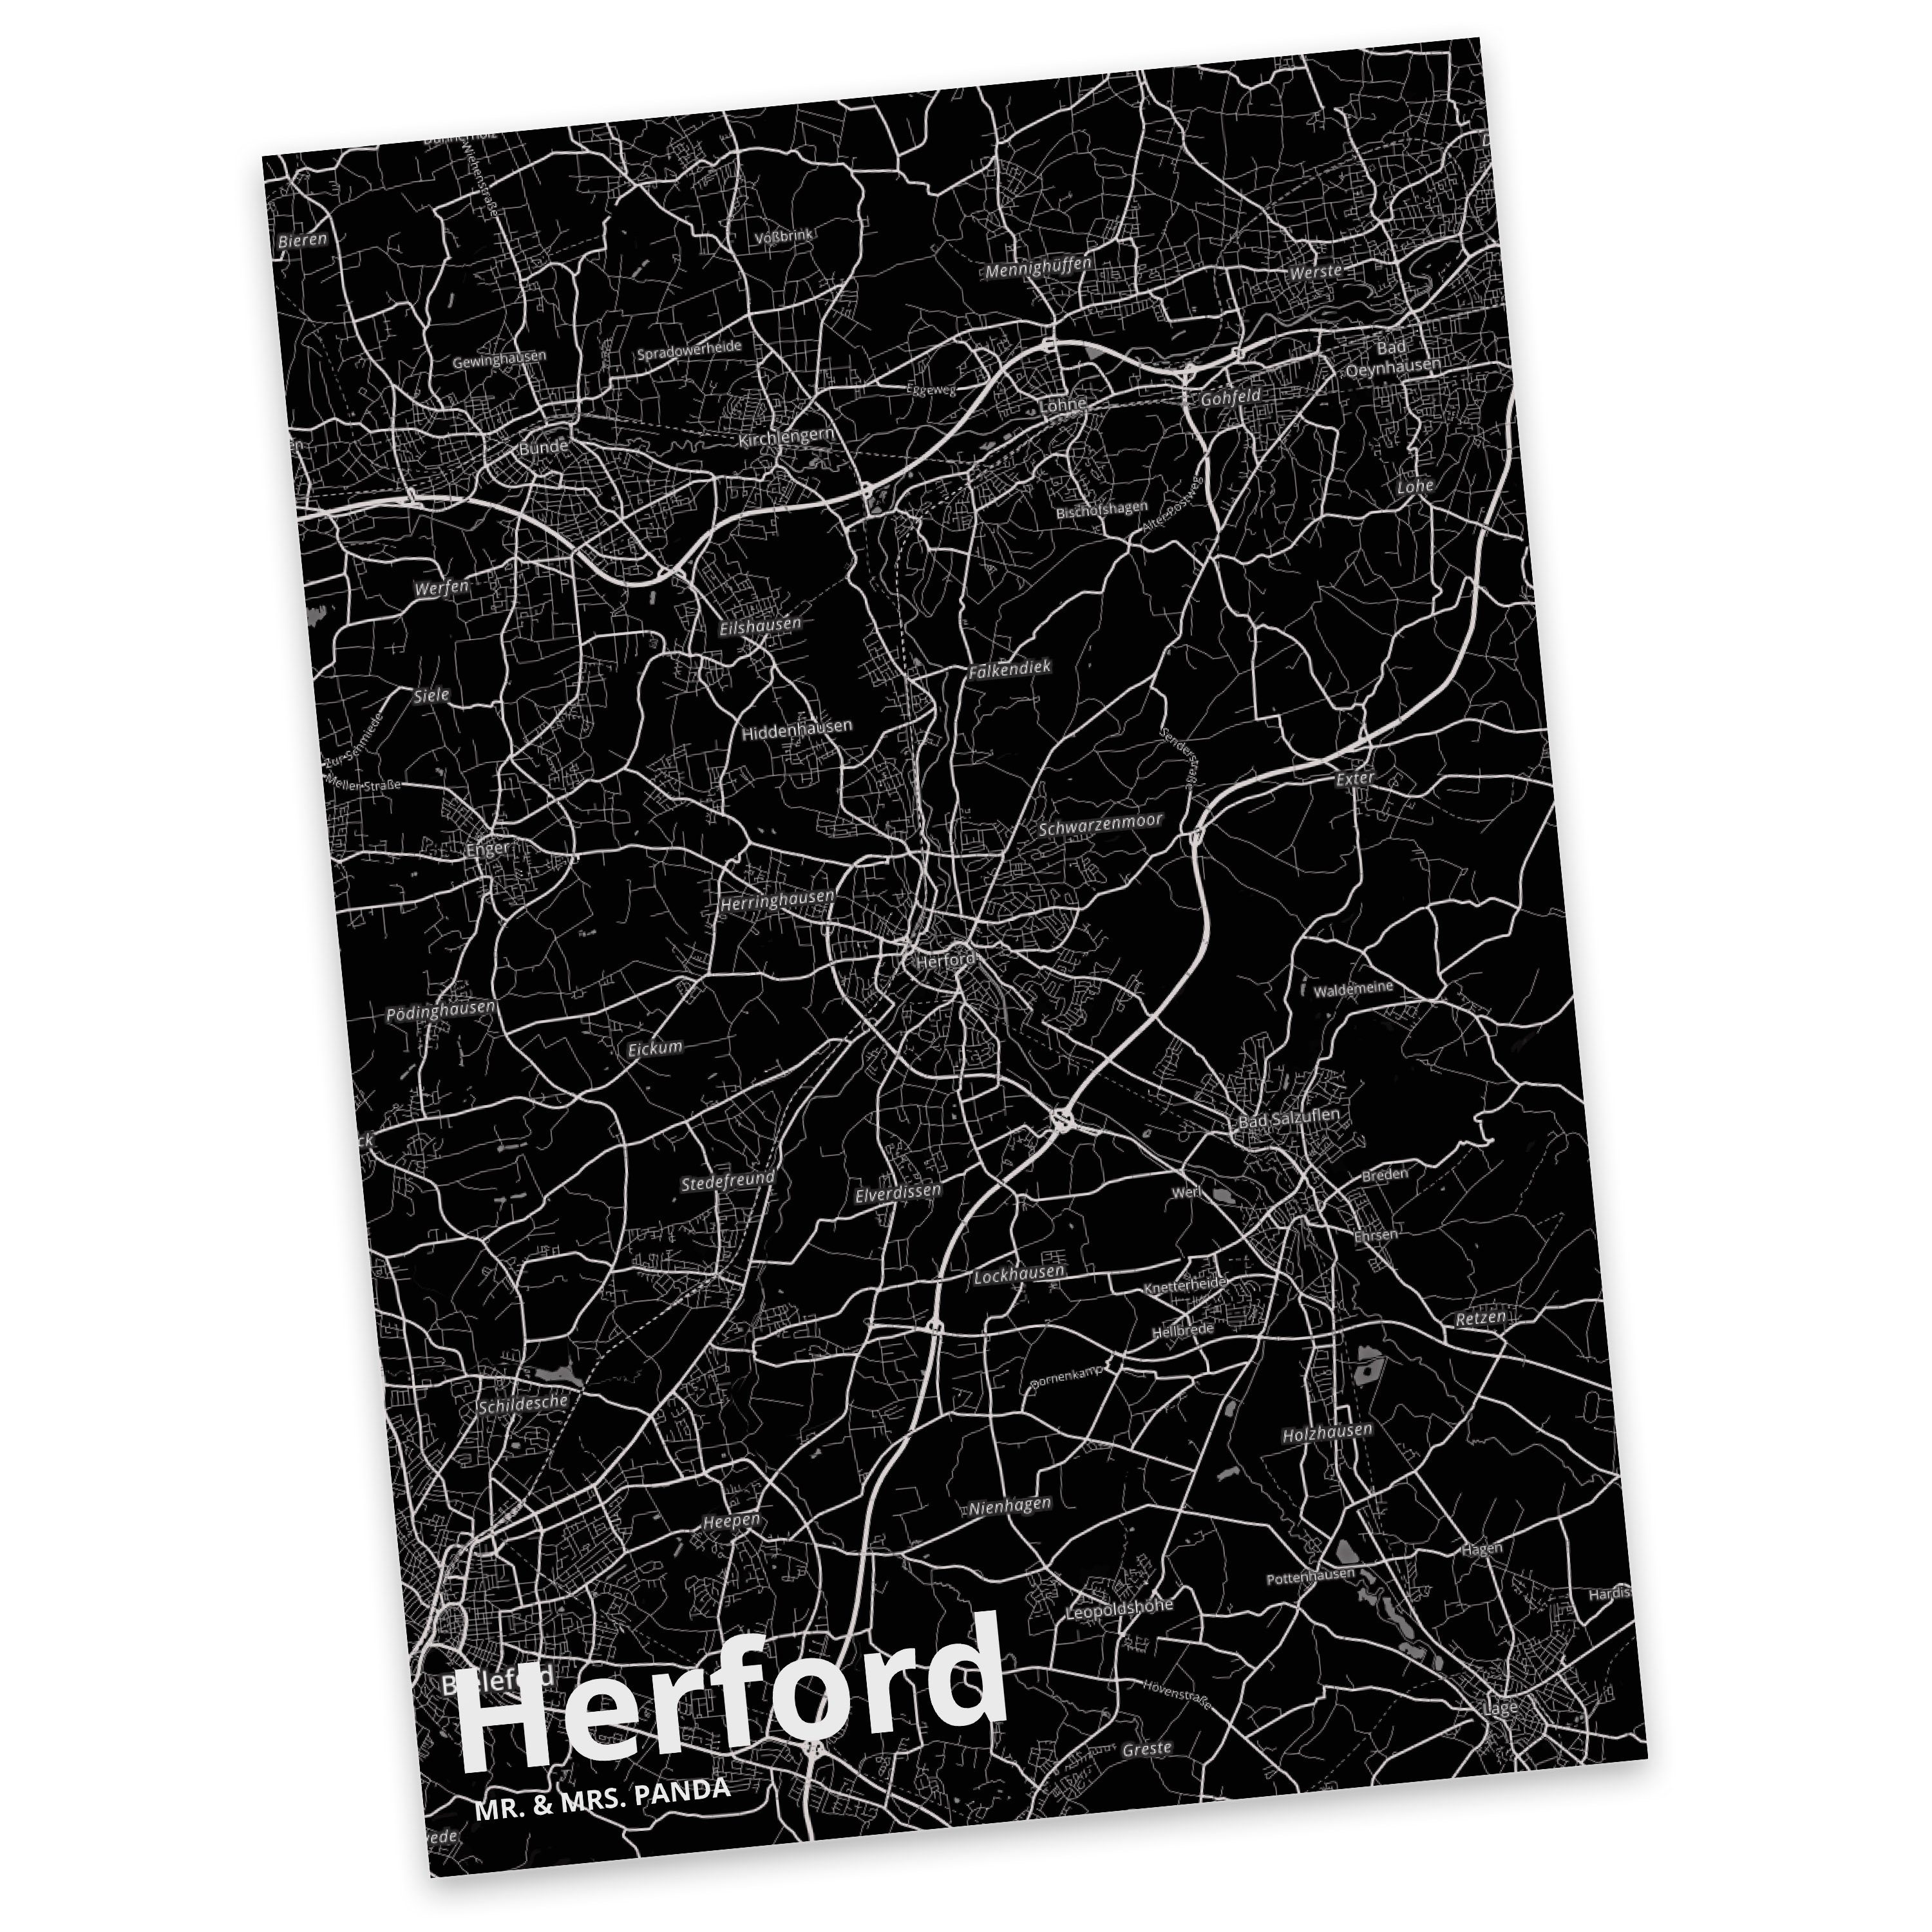 Mr. & Mrs. Panda Karte Stadtplan, Dorf Landkarte Map - Stadt Postkarte Geschenk, Herford Städte